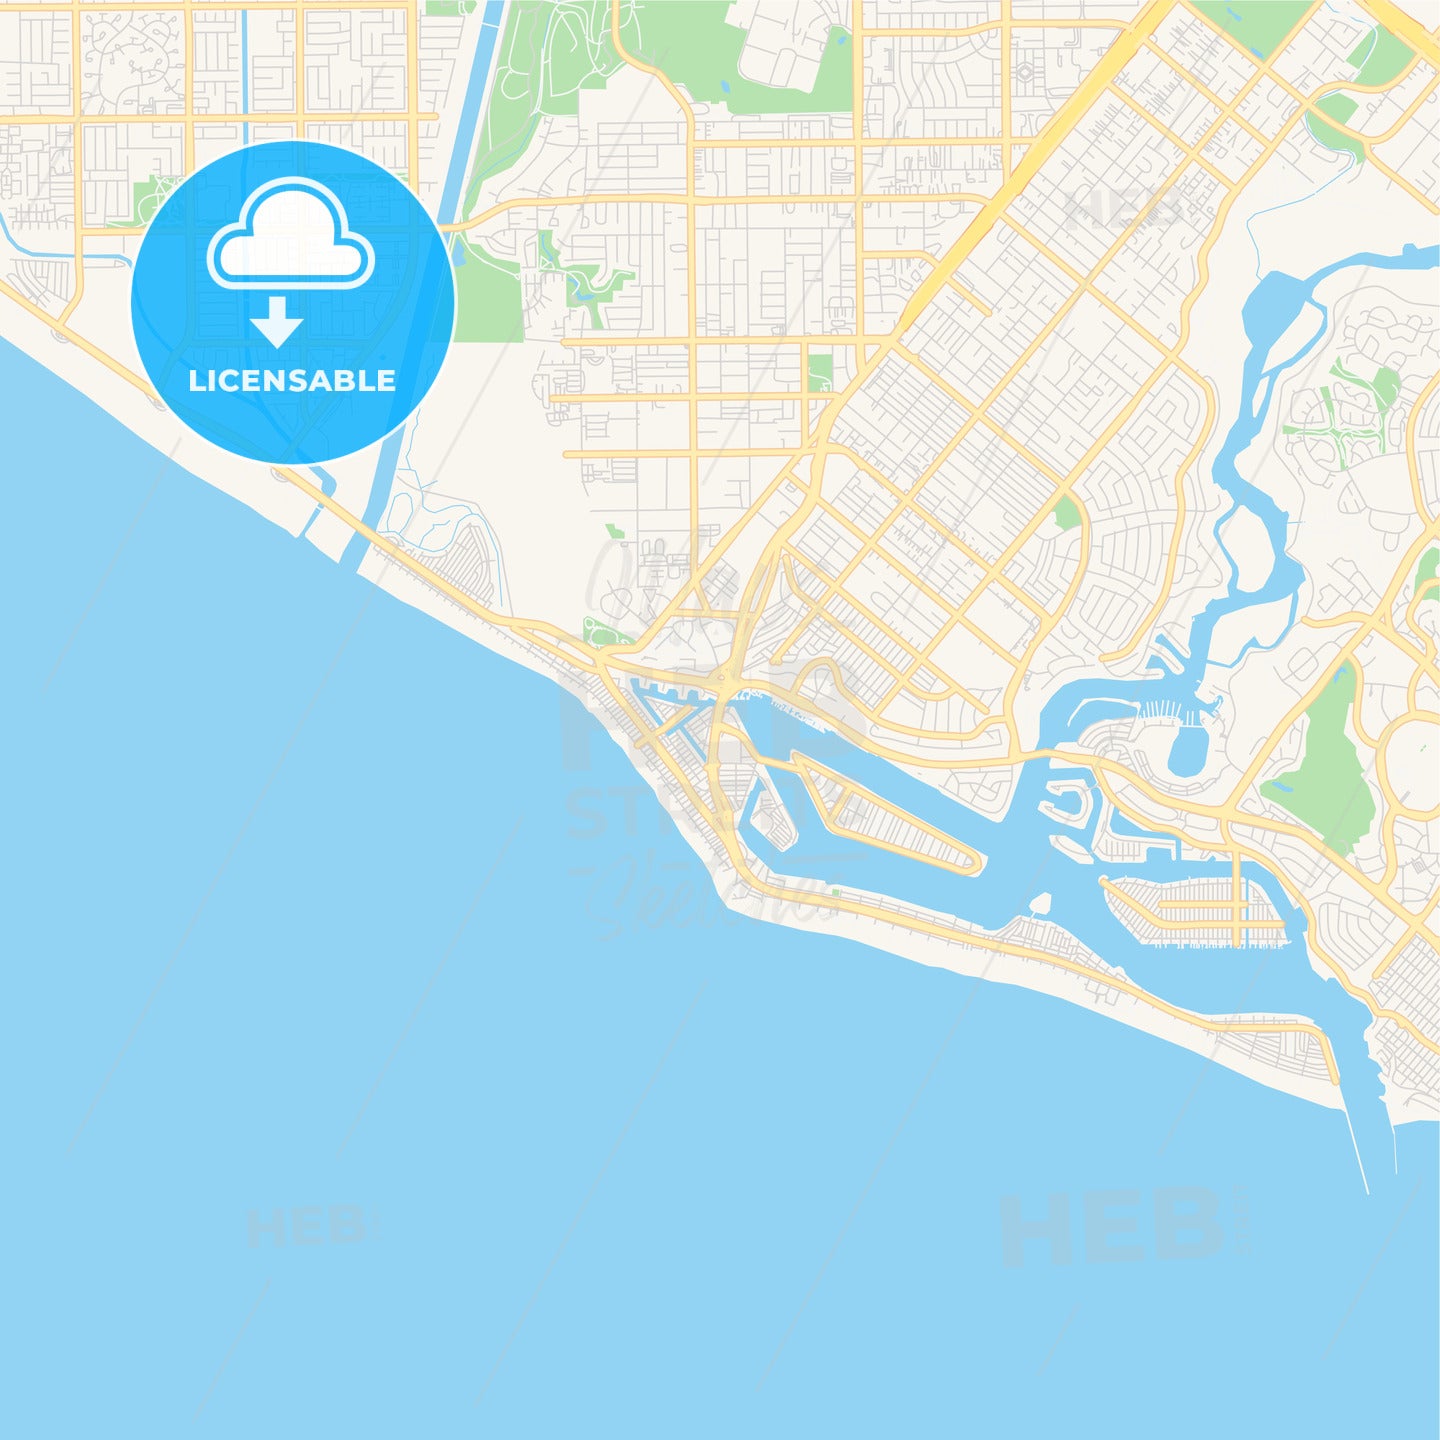 Newport Beach Printable Tourist Map